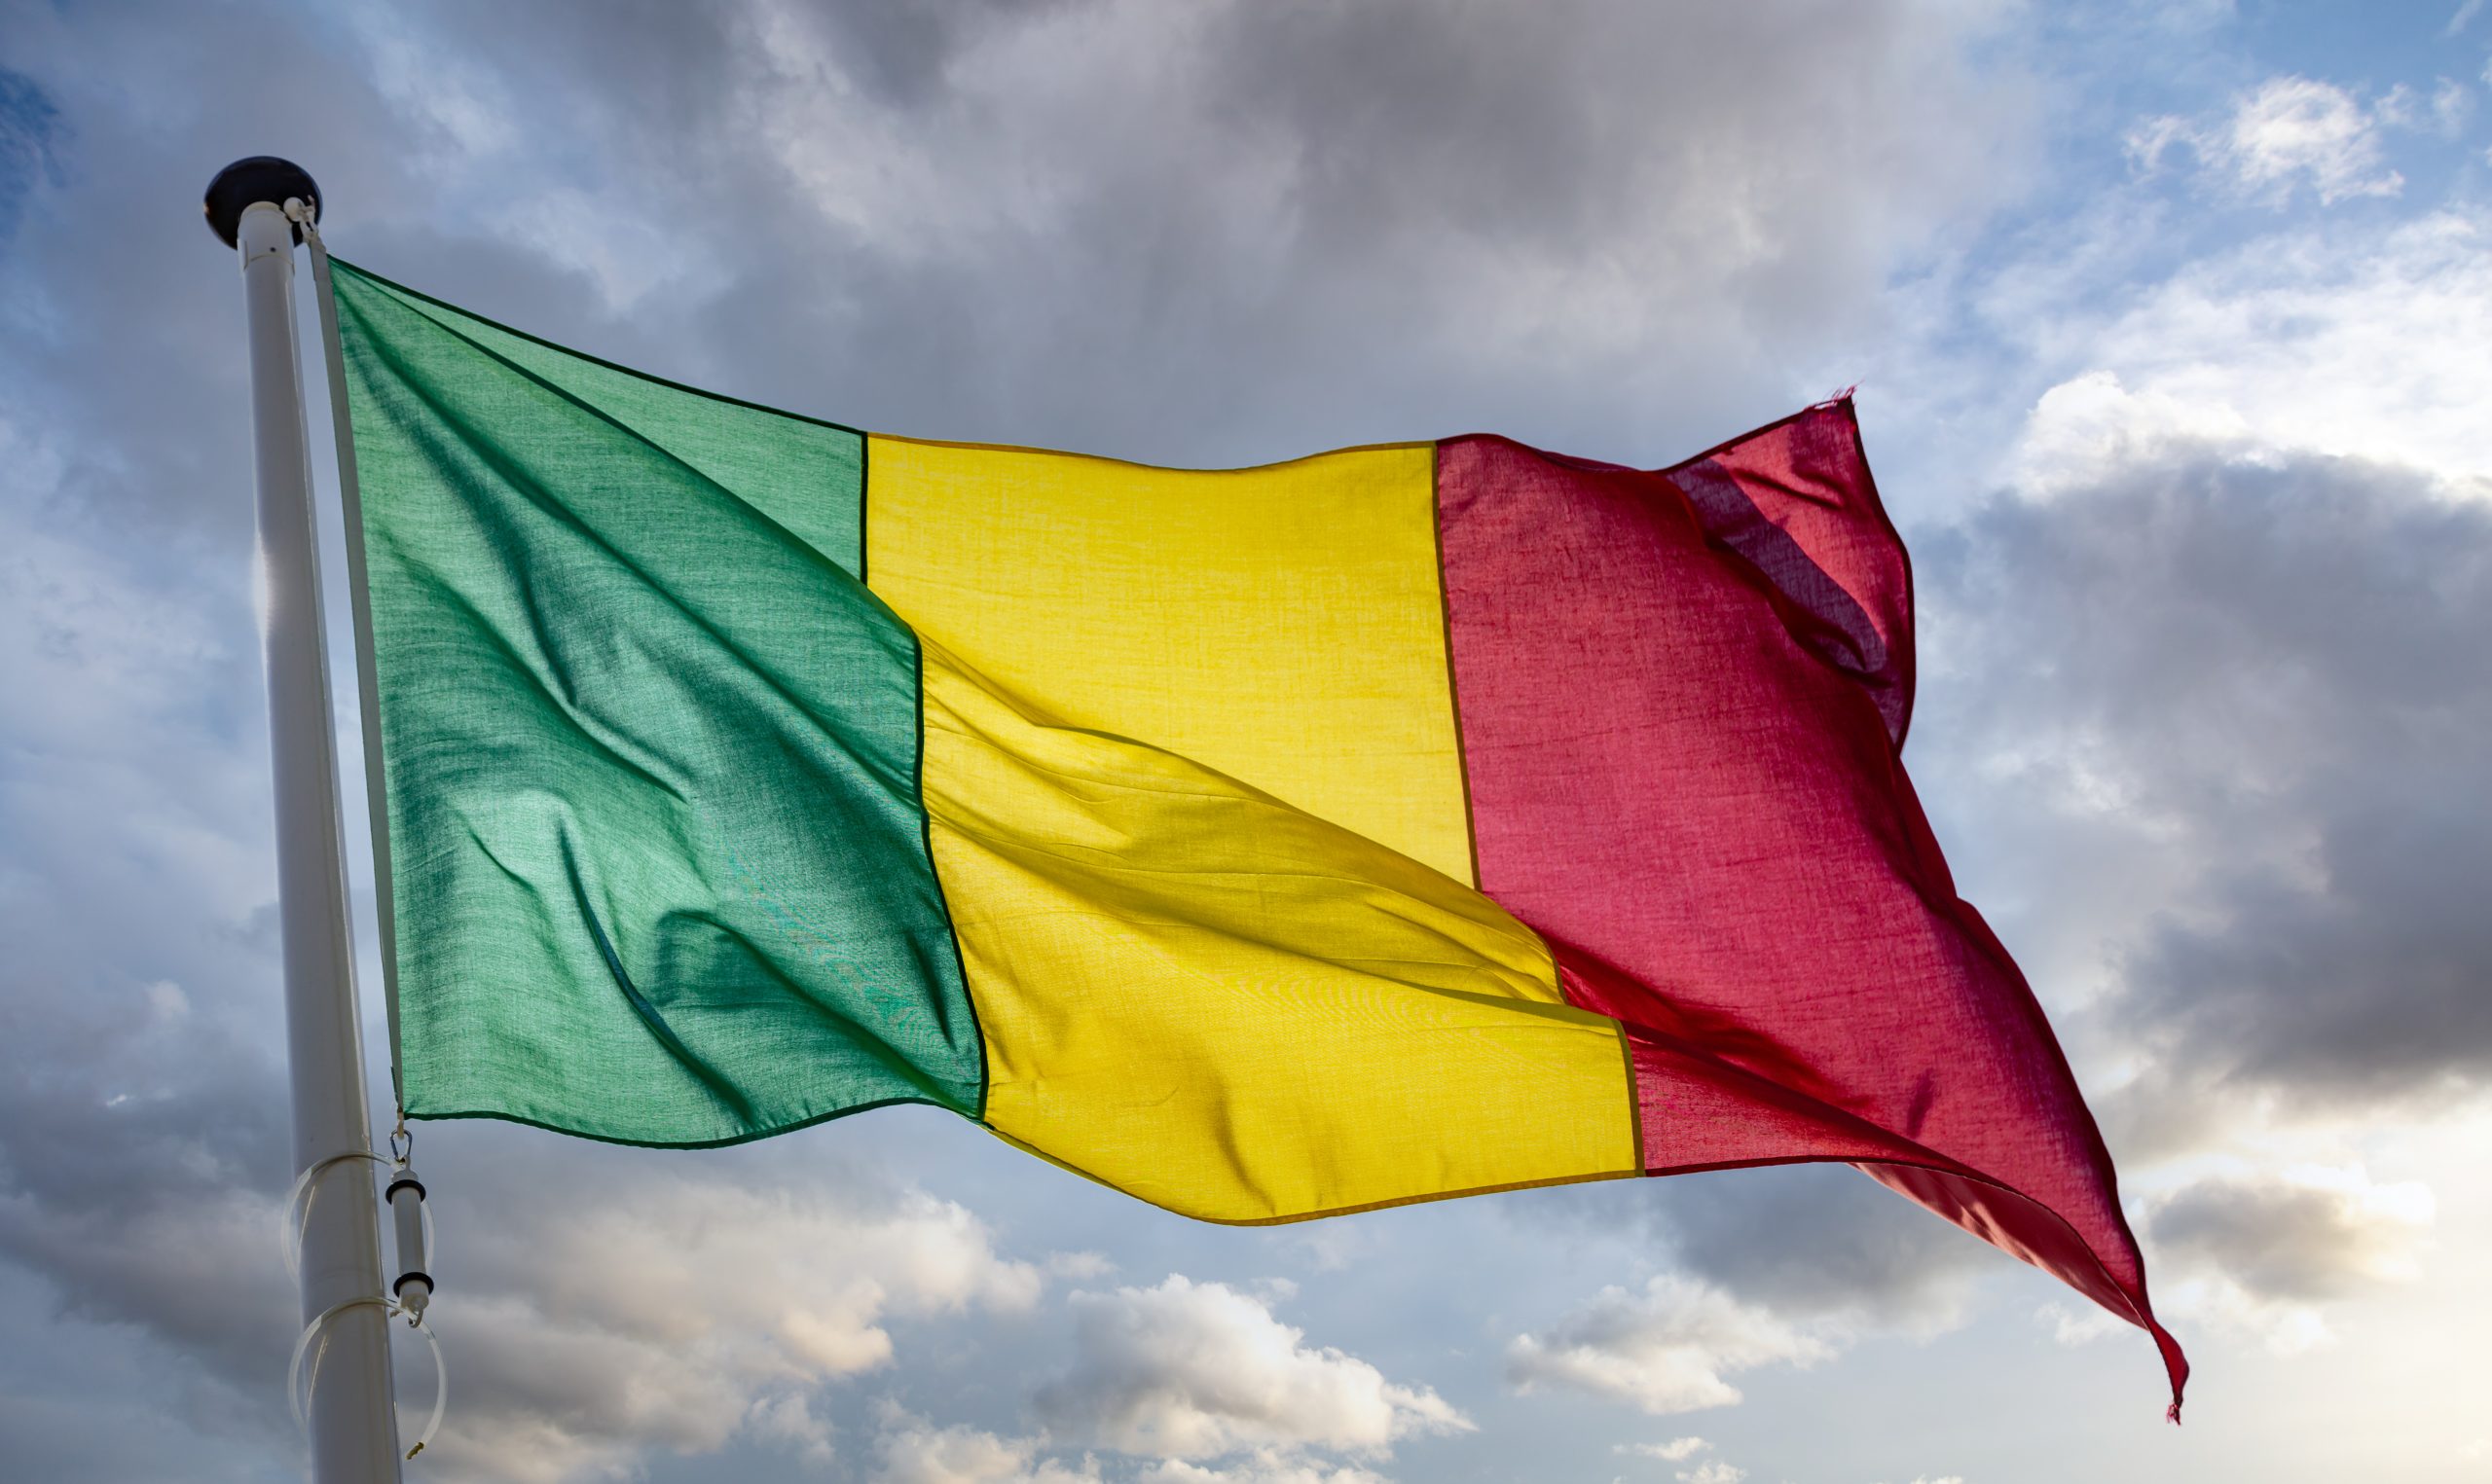 Mali sign symbol. Mali national flag on a pole waving against cloudy sky background.